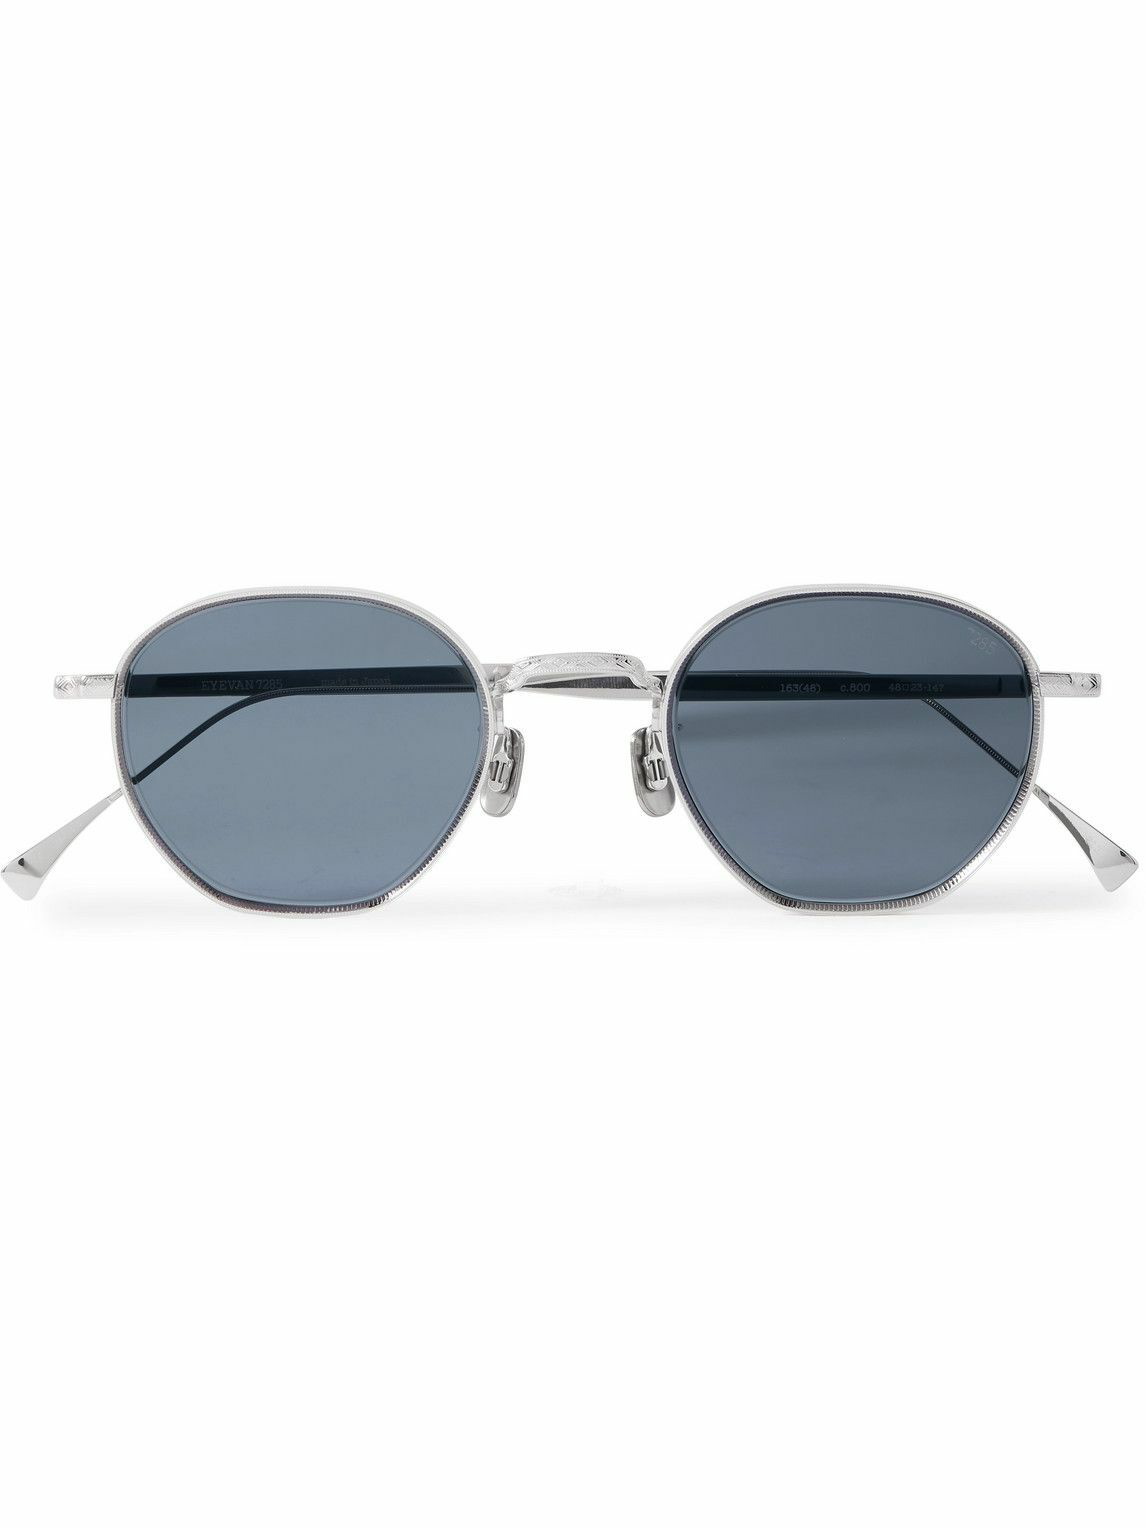 Photo: Eyevan 7285 - Round-Frame Titanium Sunglasses